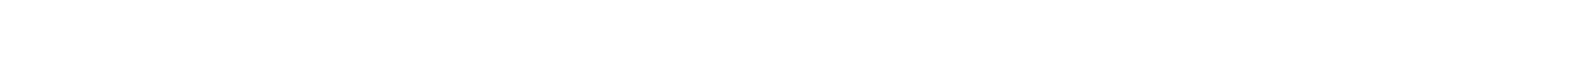 Central Securities logo large for dark backgrounds (transparent PNG)